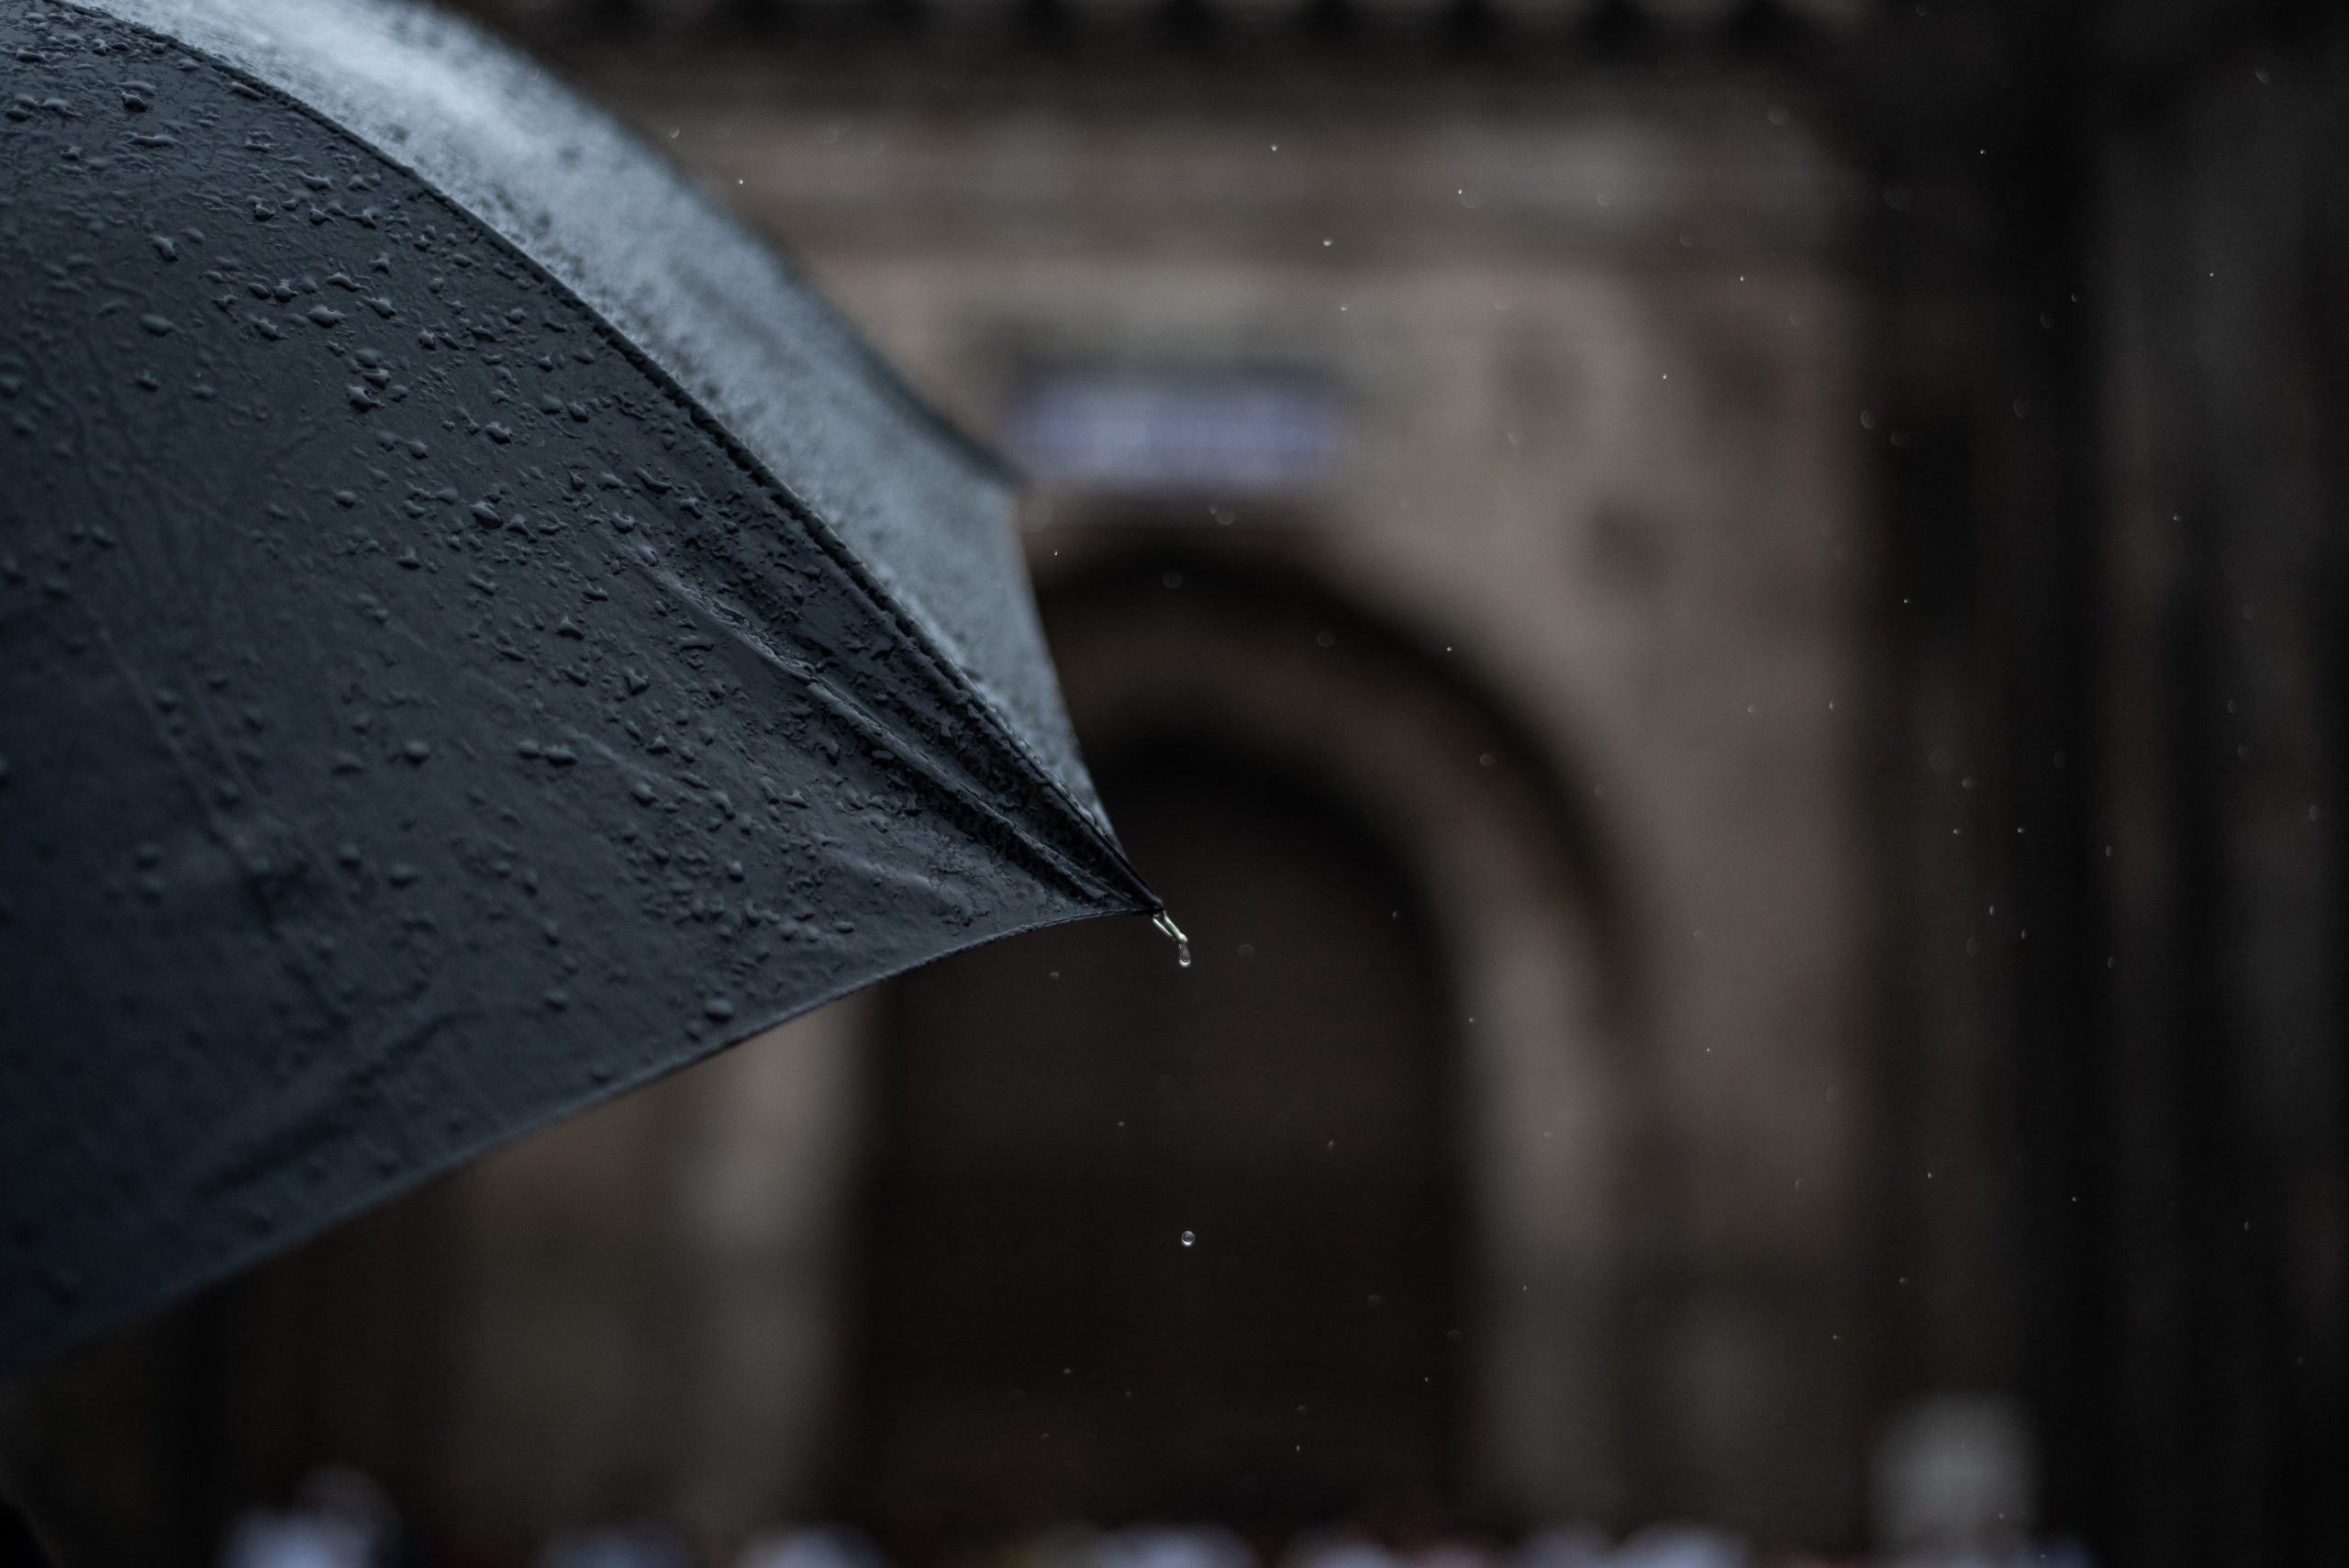 Umbrellas are a must for Kerala